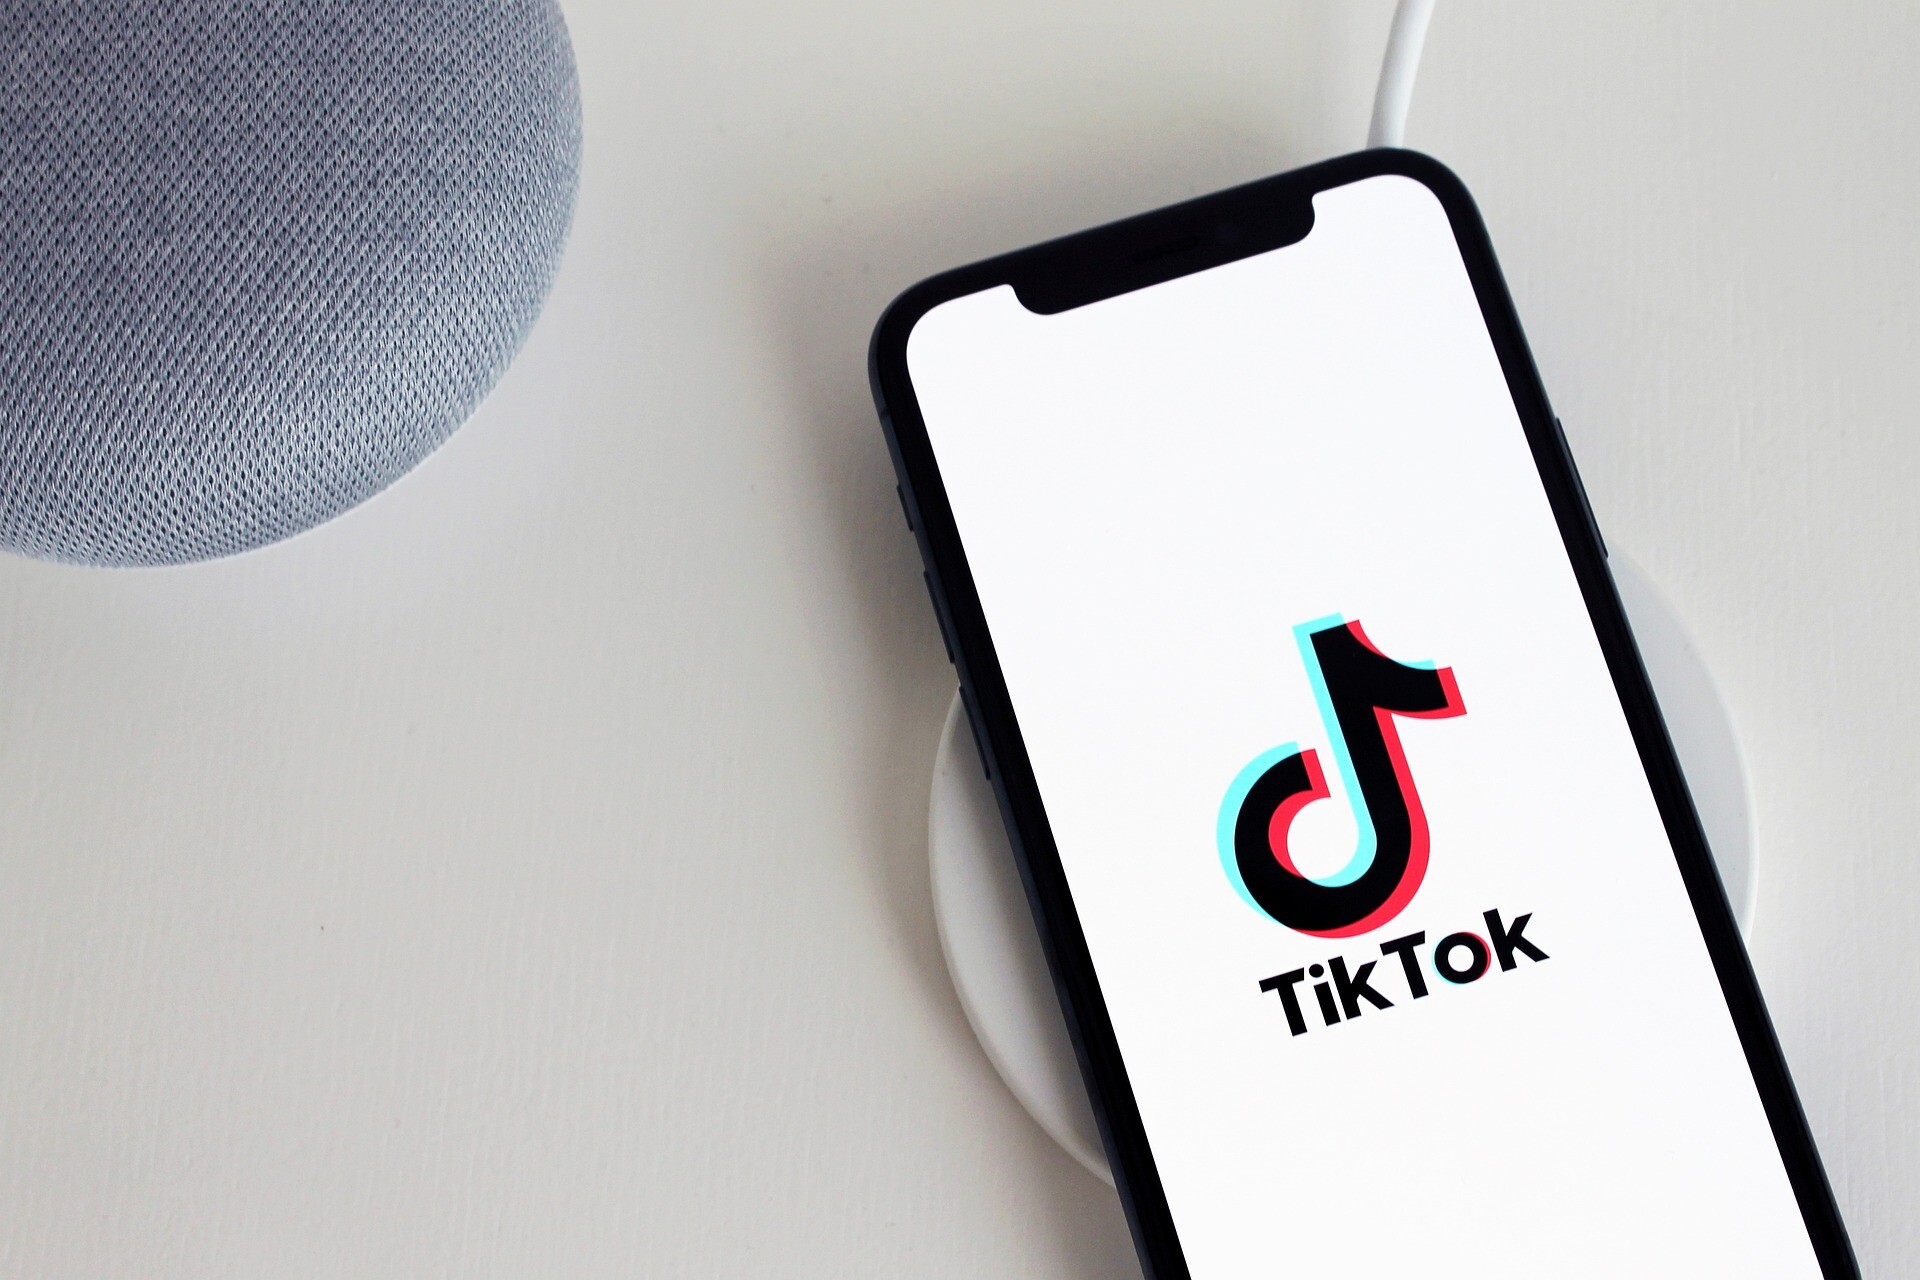 TikTok video scrubbing: How to fast-forward and backward TikTok videos